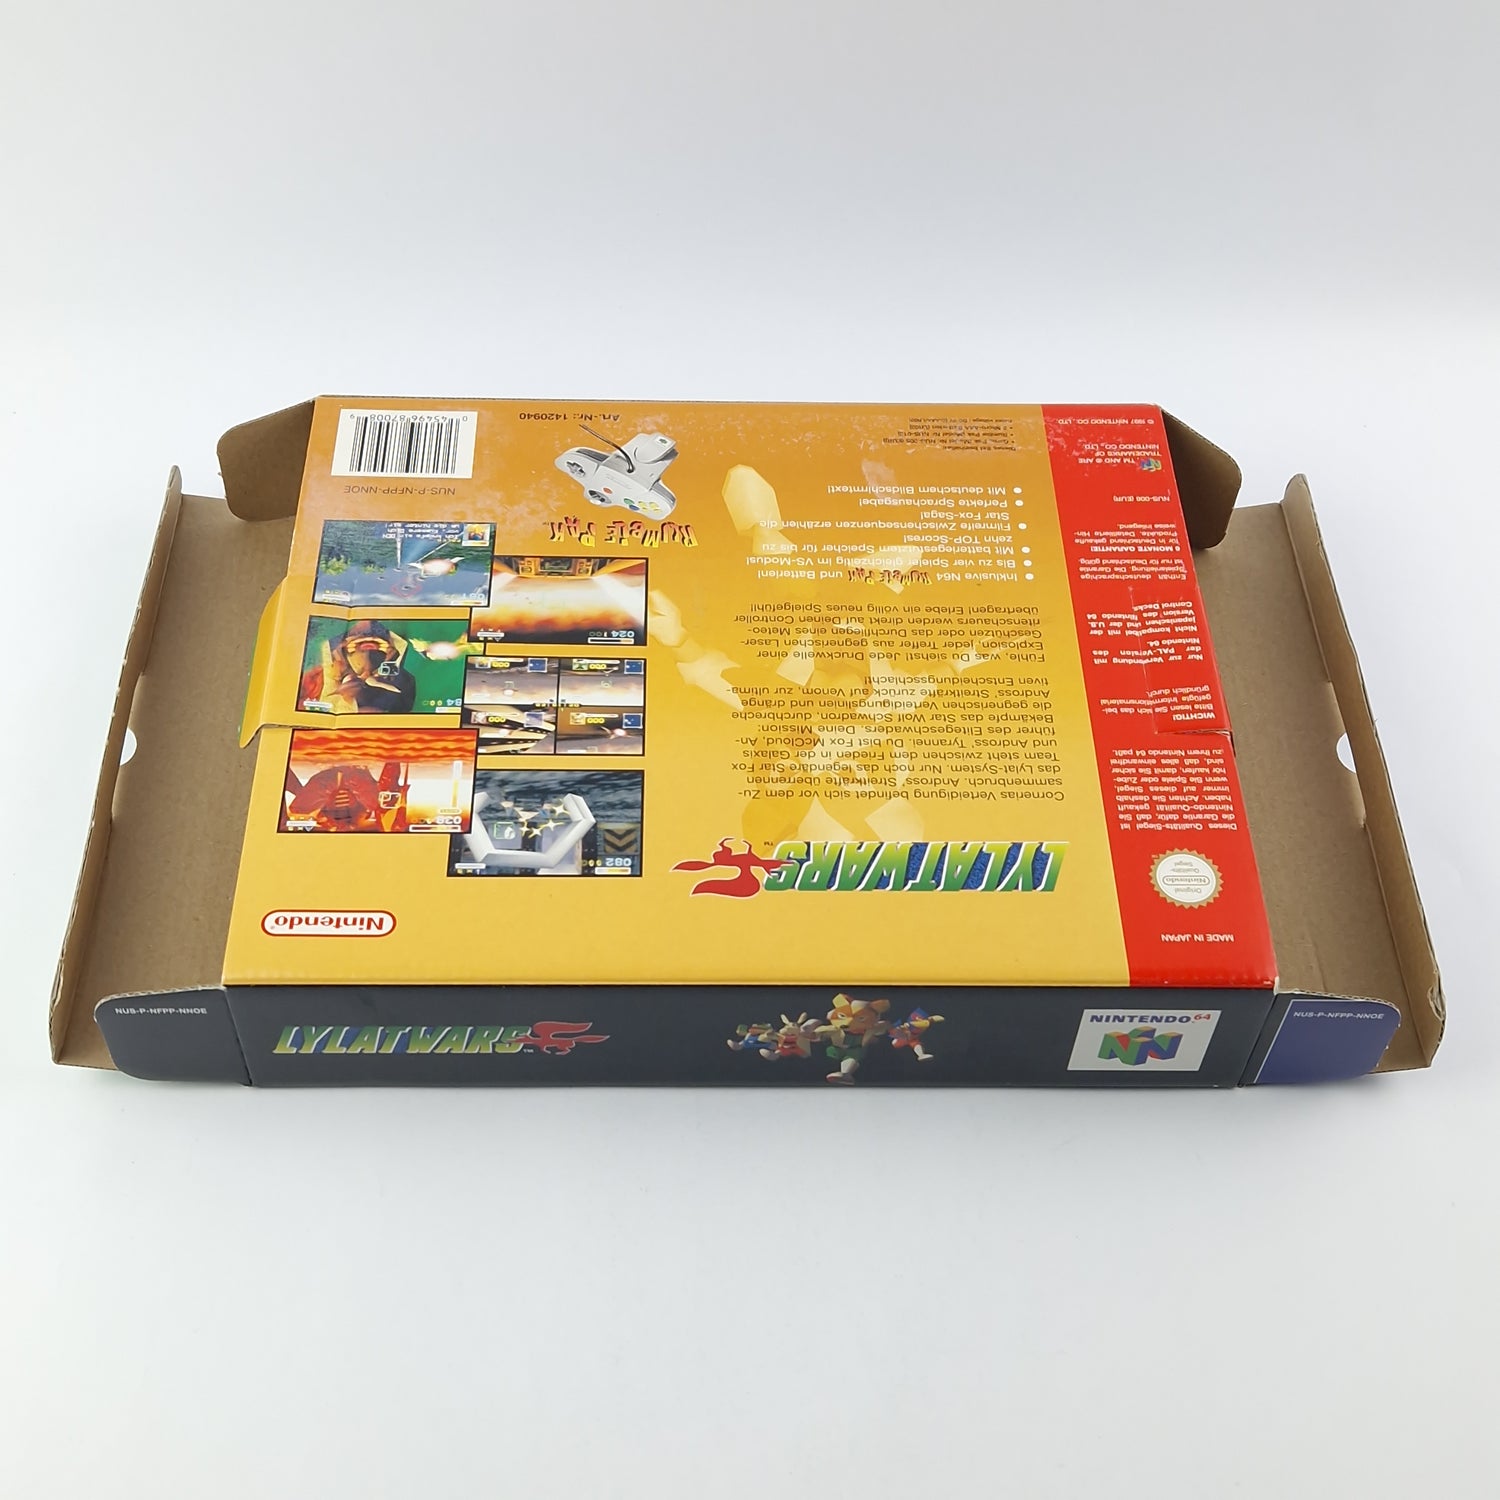 Nintendo 64 Game: Lylatwars - Module Rumble Pak Instructions BIG BOX OVP / N64 PAL